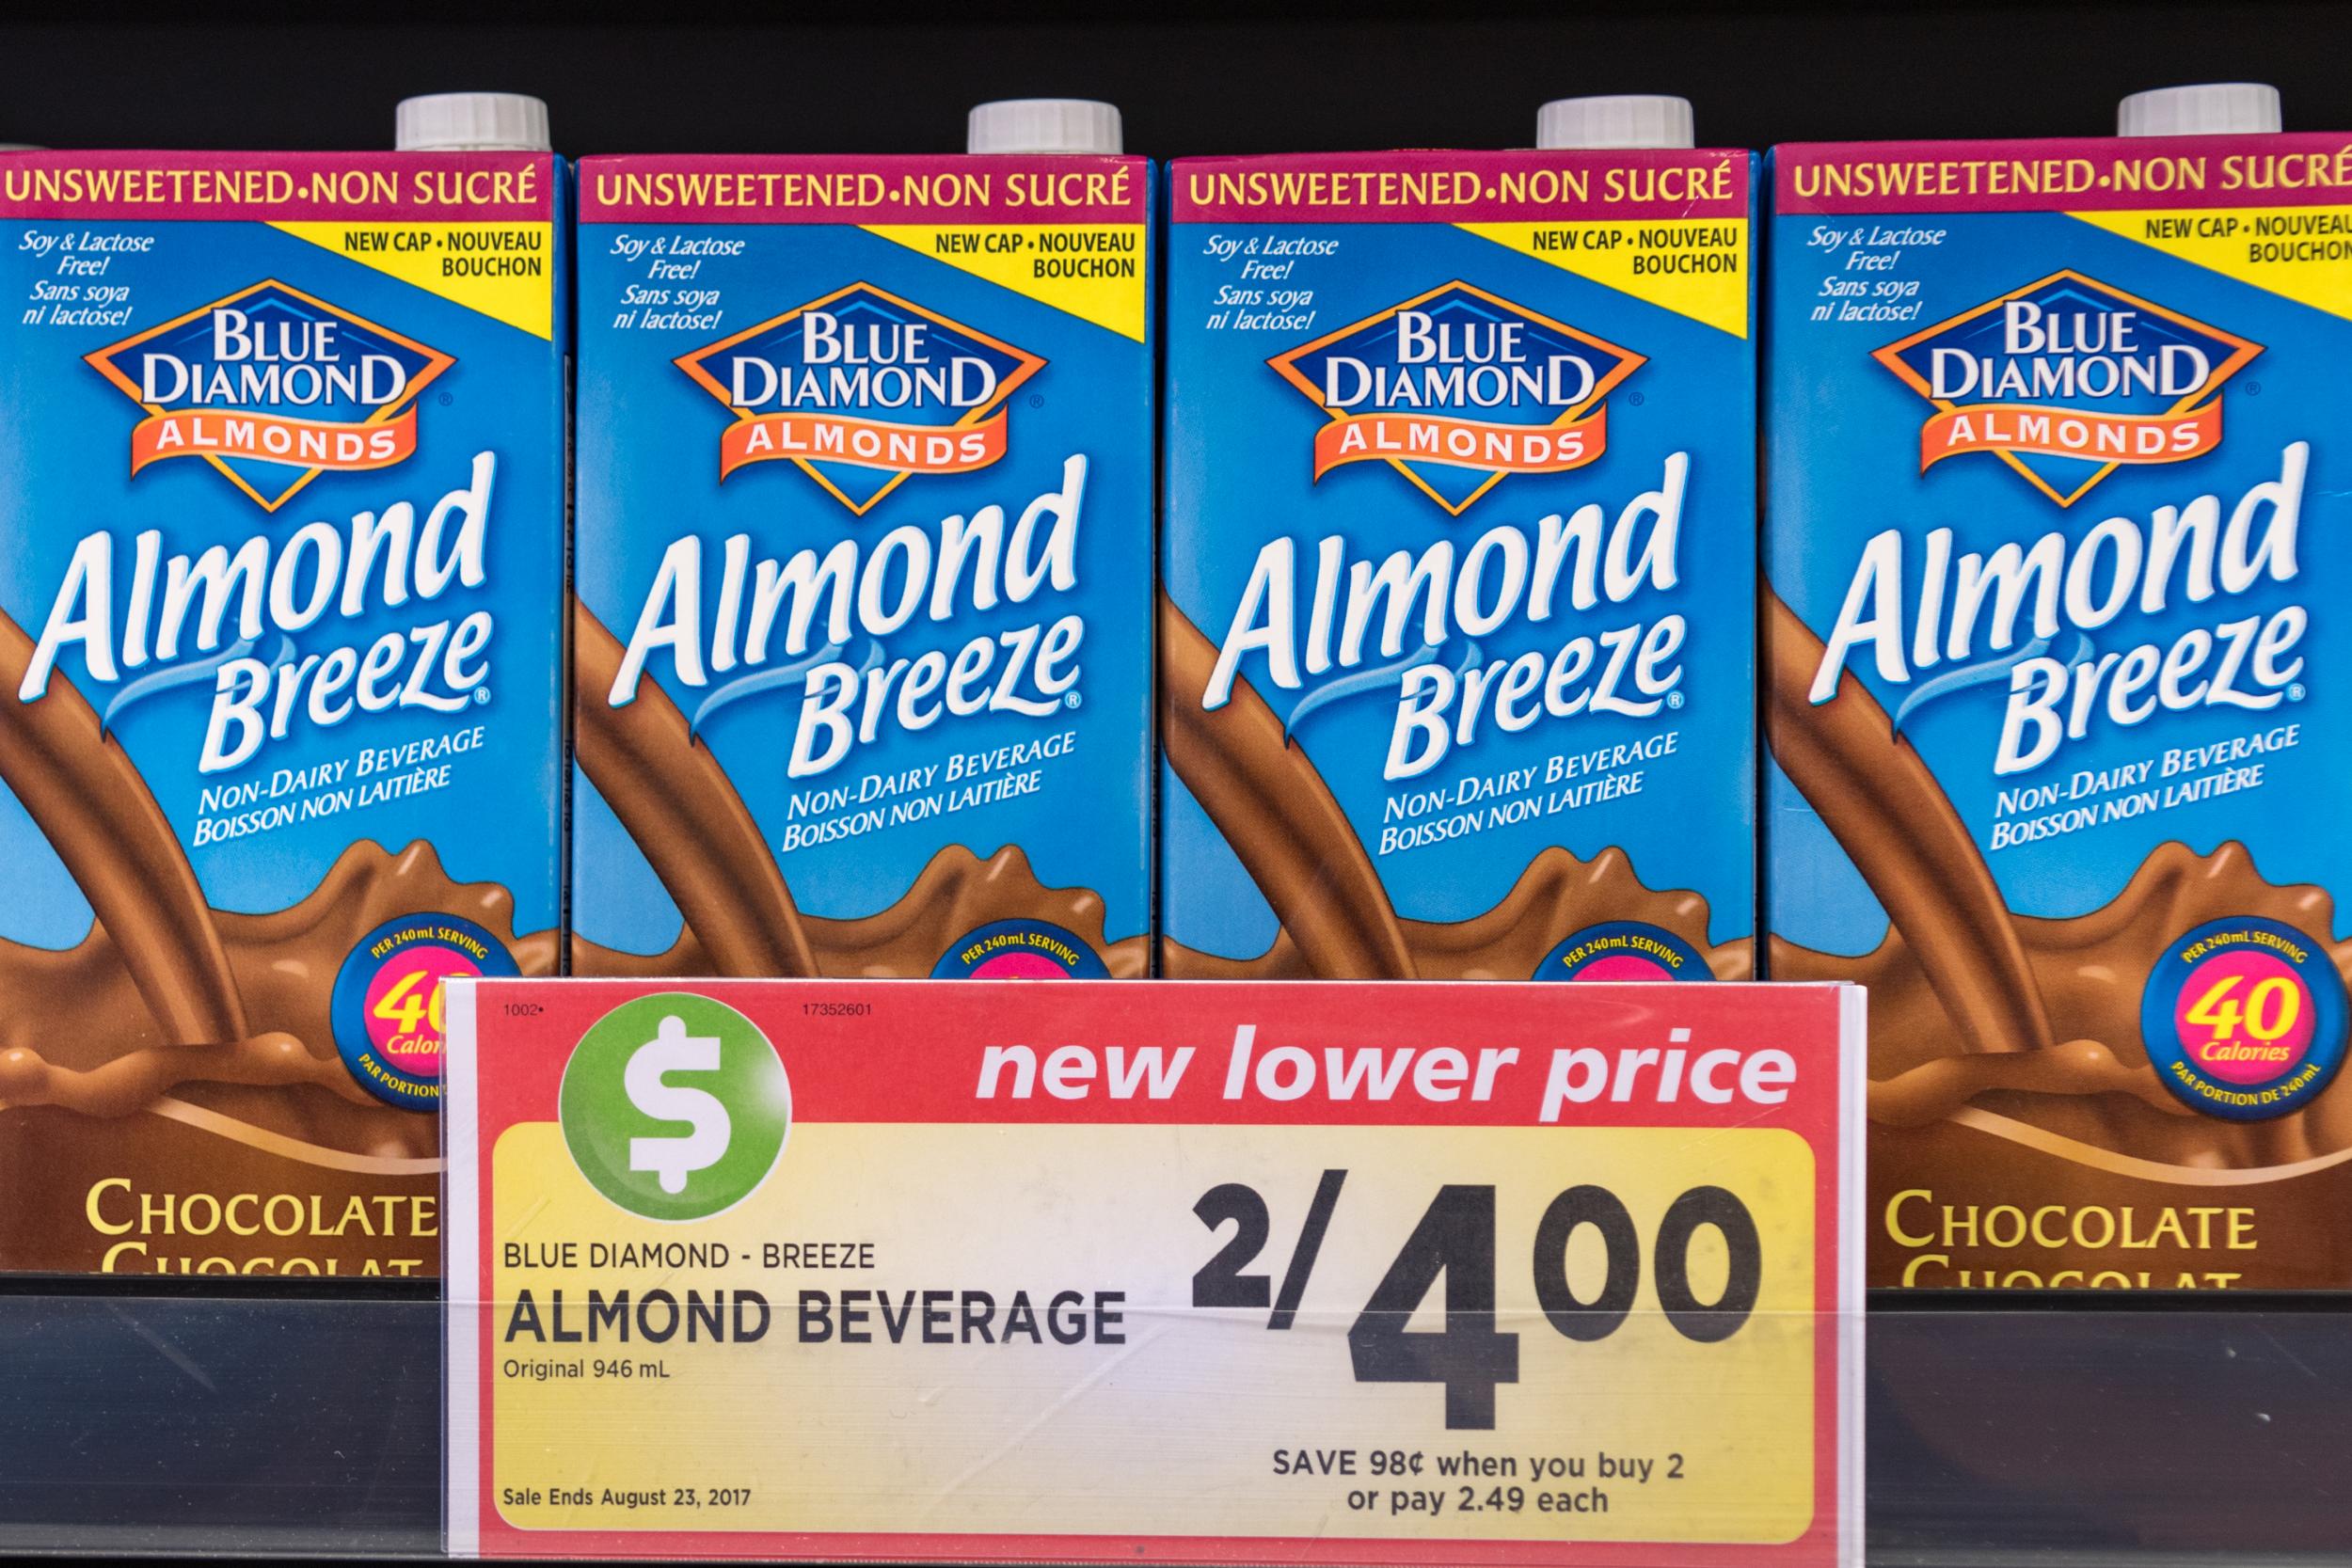 Blue Diamond almond breeze beverage tetra packs on sale in Canada